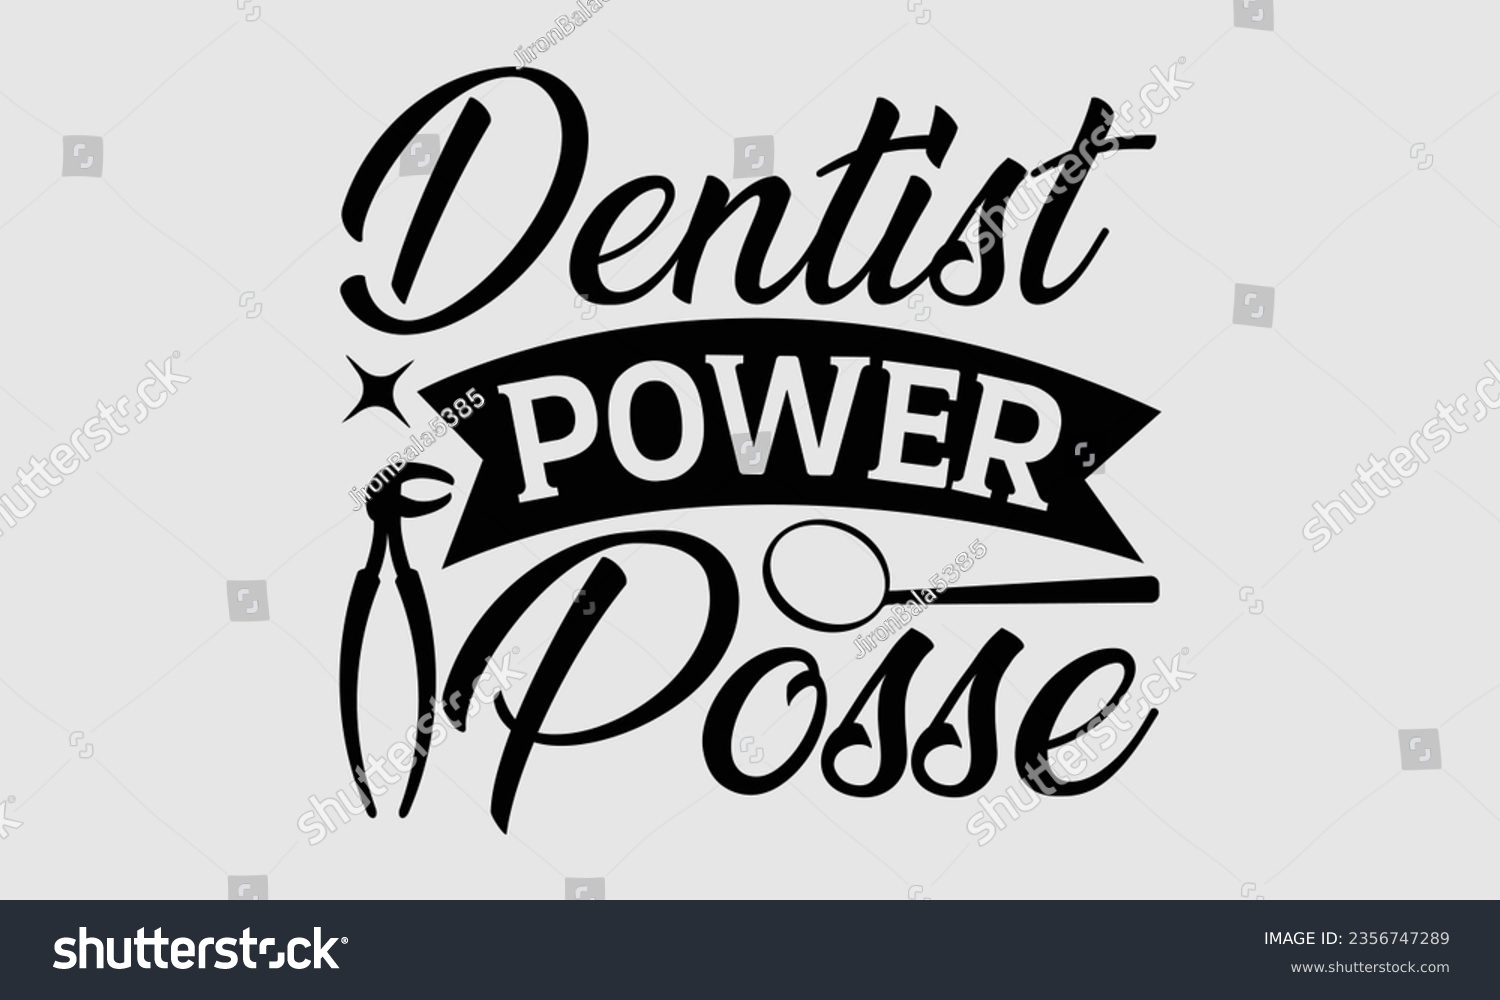 SVG of Dentist Power Posse - Dentist t-shirt design, Handmade calligraphy vector illustration, prints on t-shirts, bags, posters, cards and Mug.
 svg